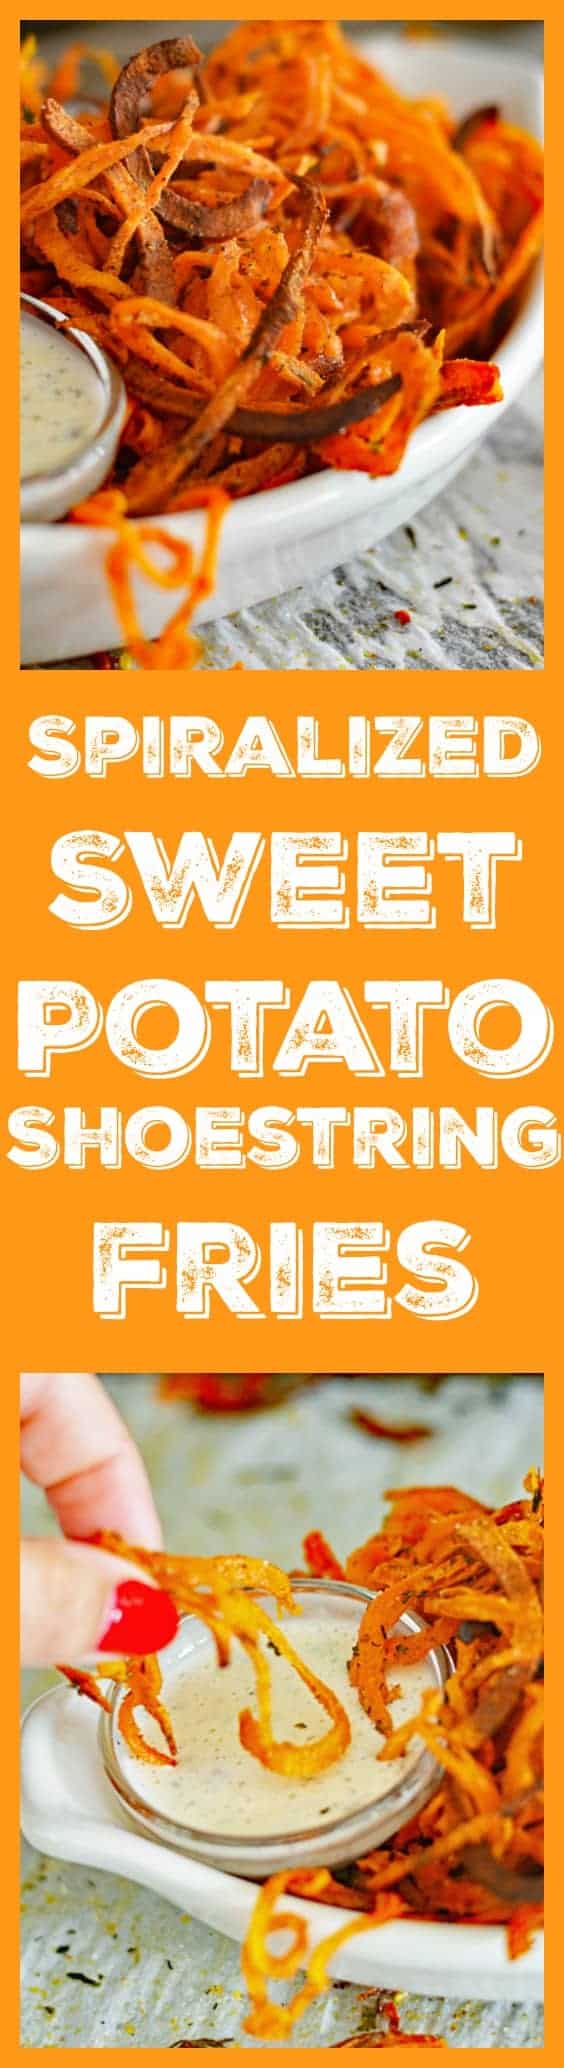 Spiralized Sweet Potato Fries